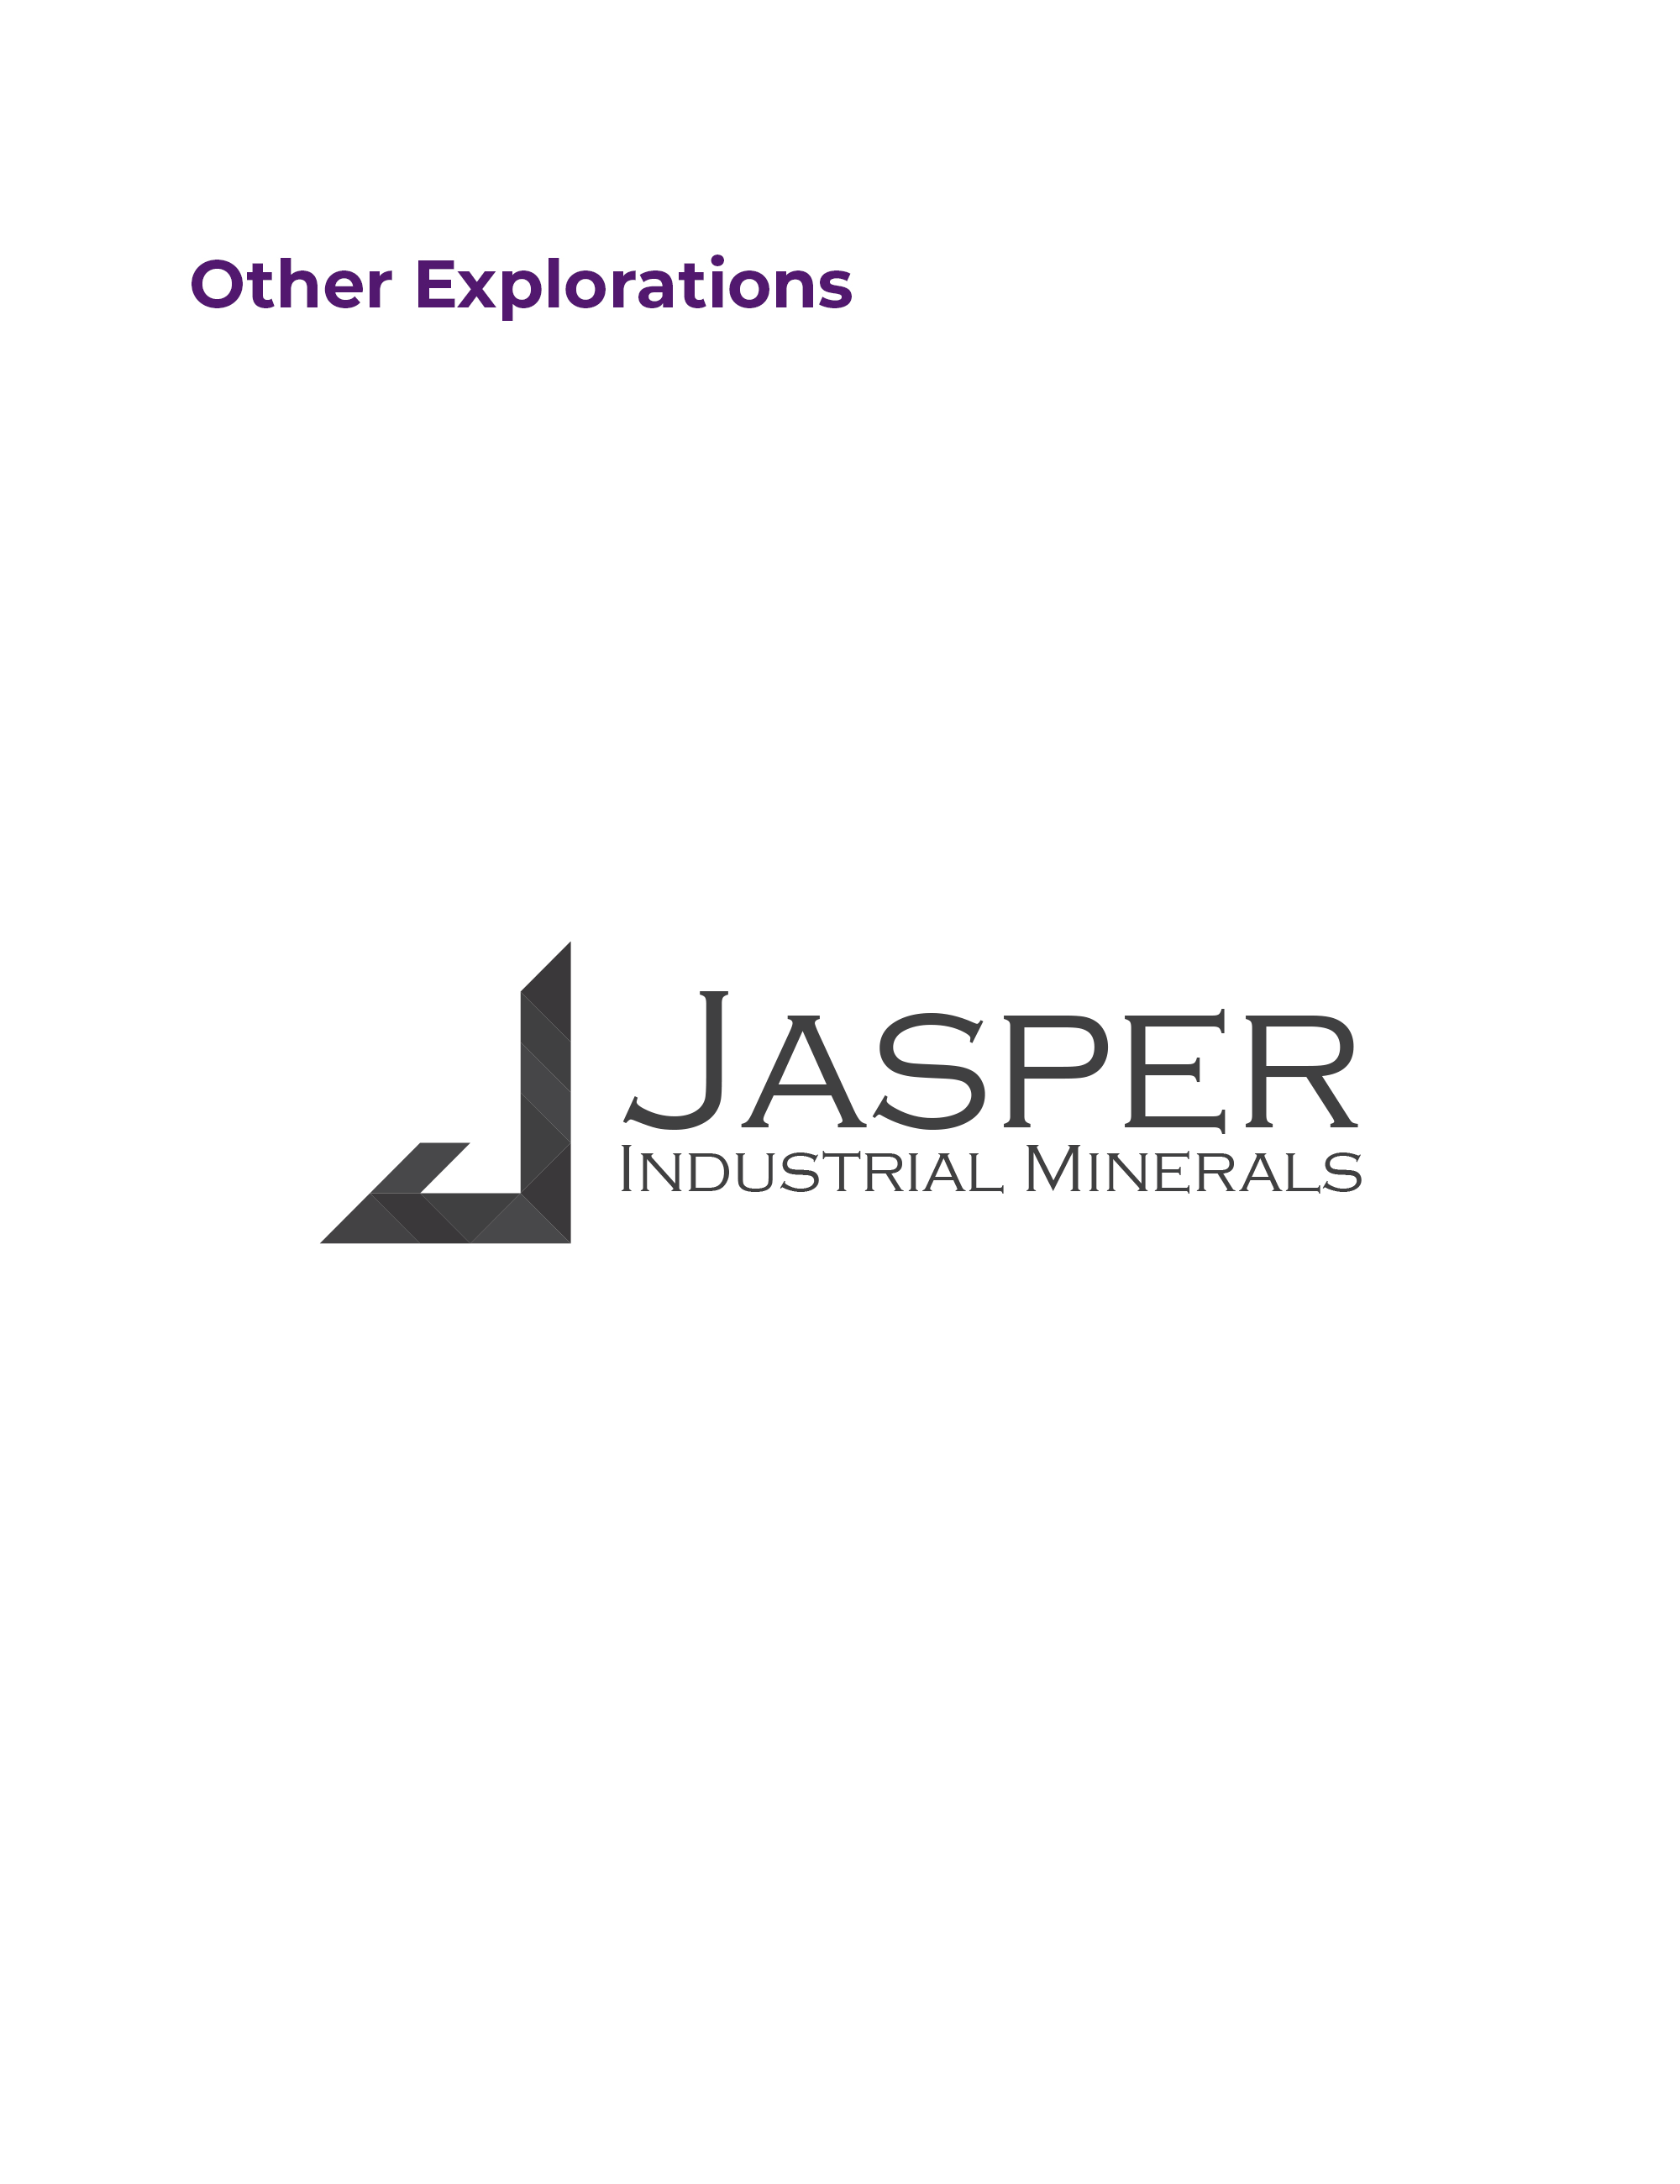 JasperMinerals-Branding-OtherExplorations-GIF